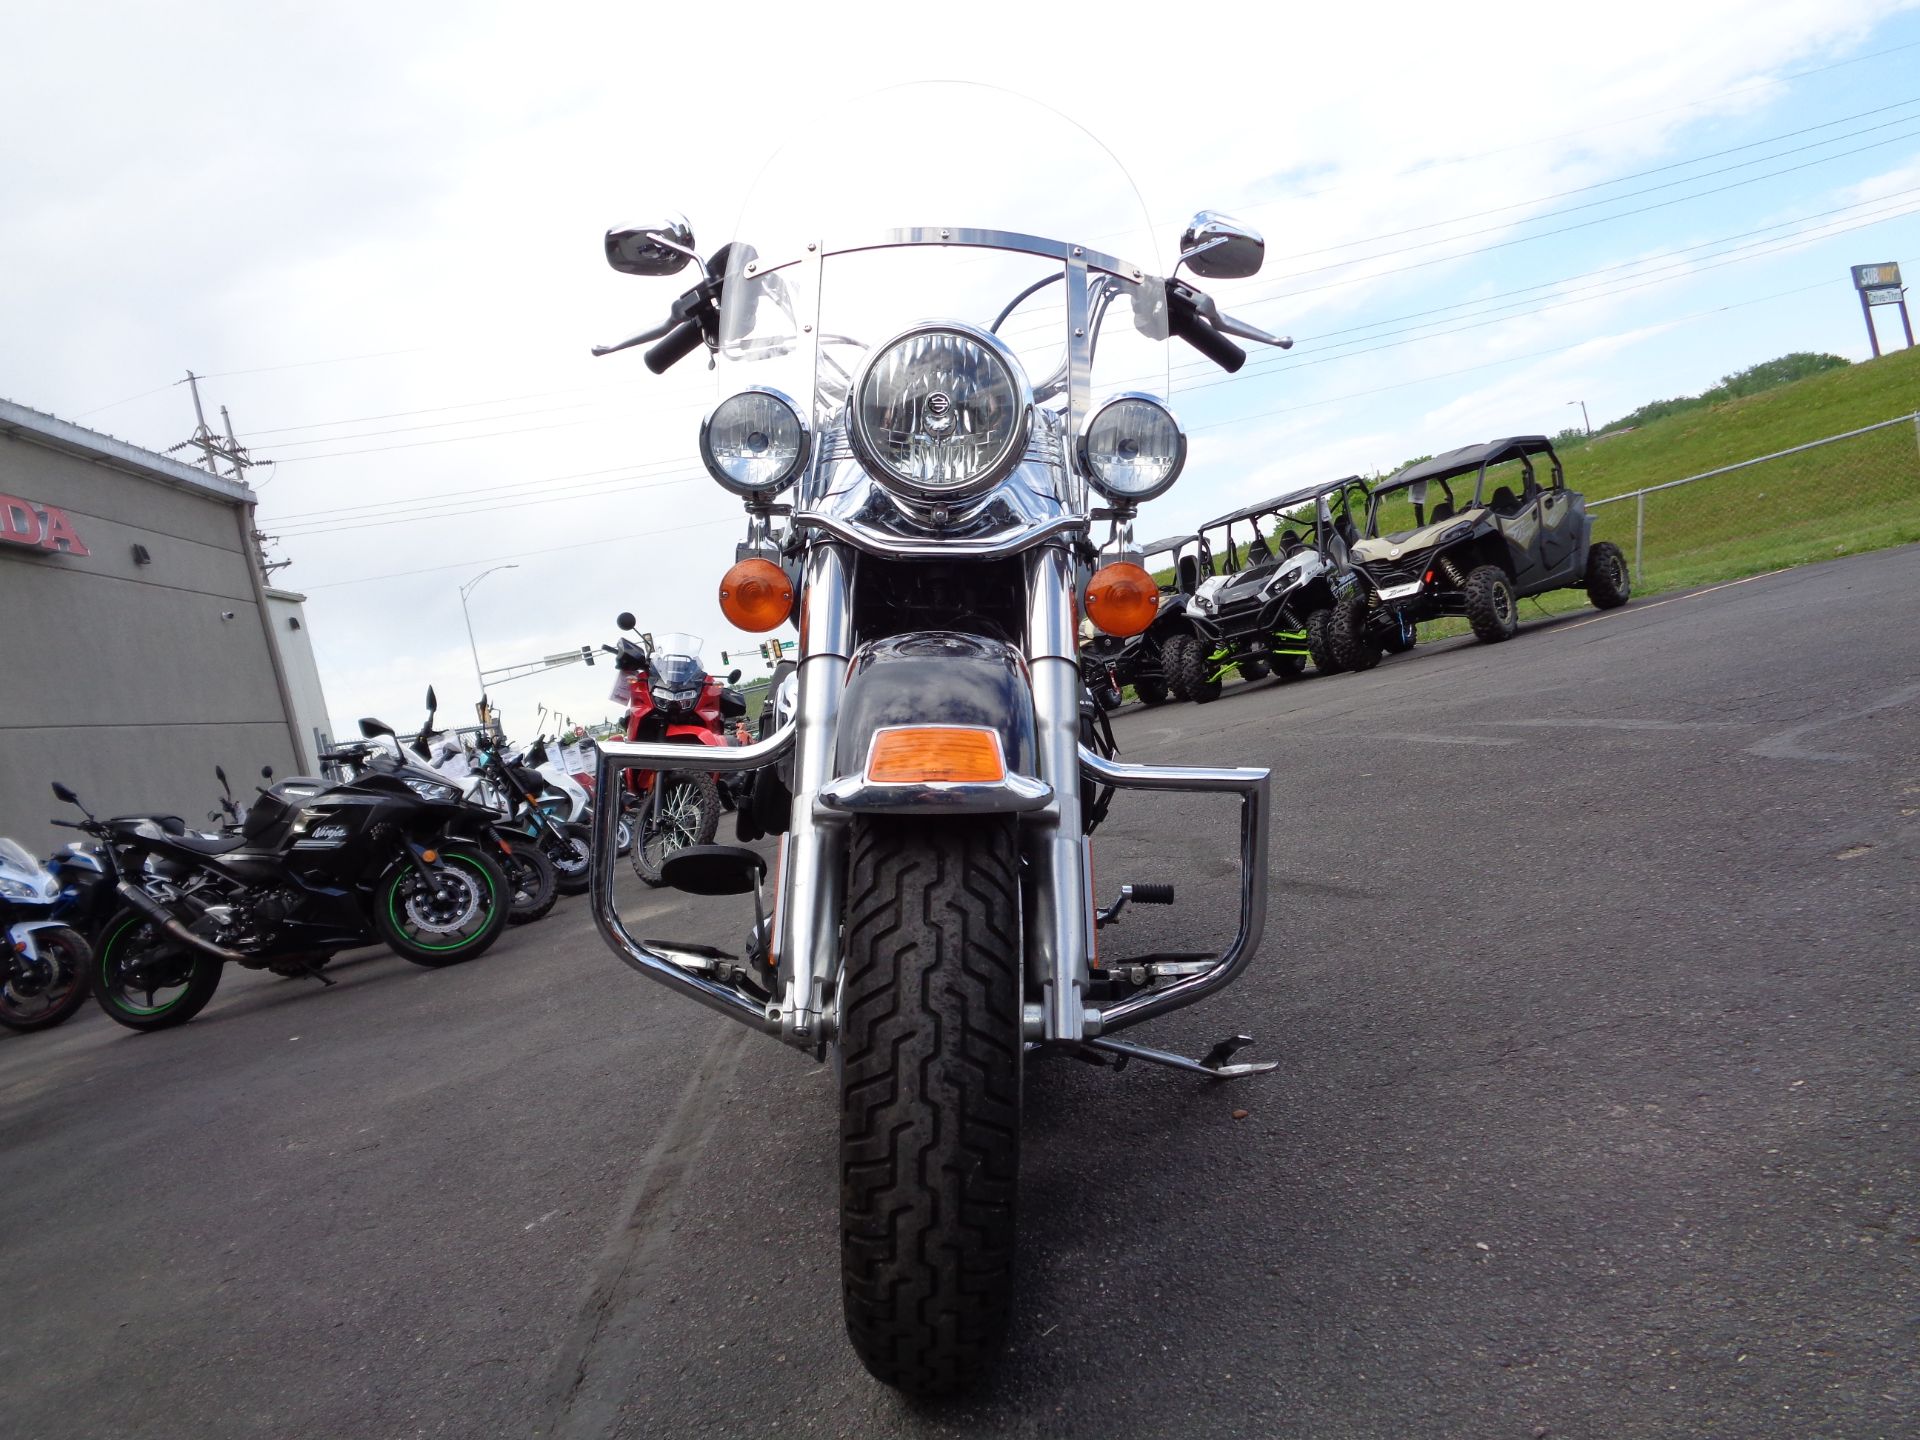 2012 Harley-Davidson Heritage Softail® Classic in North Mankato, Minnesota - Photo 2